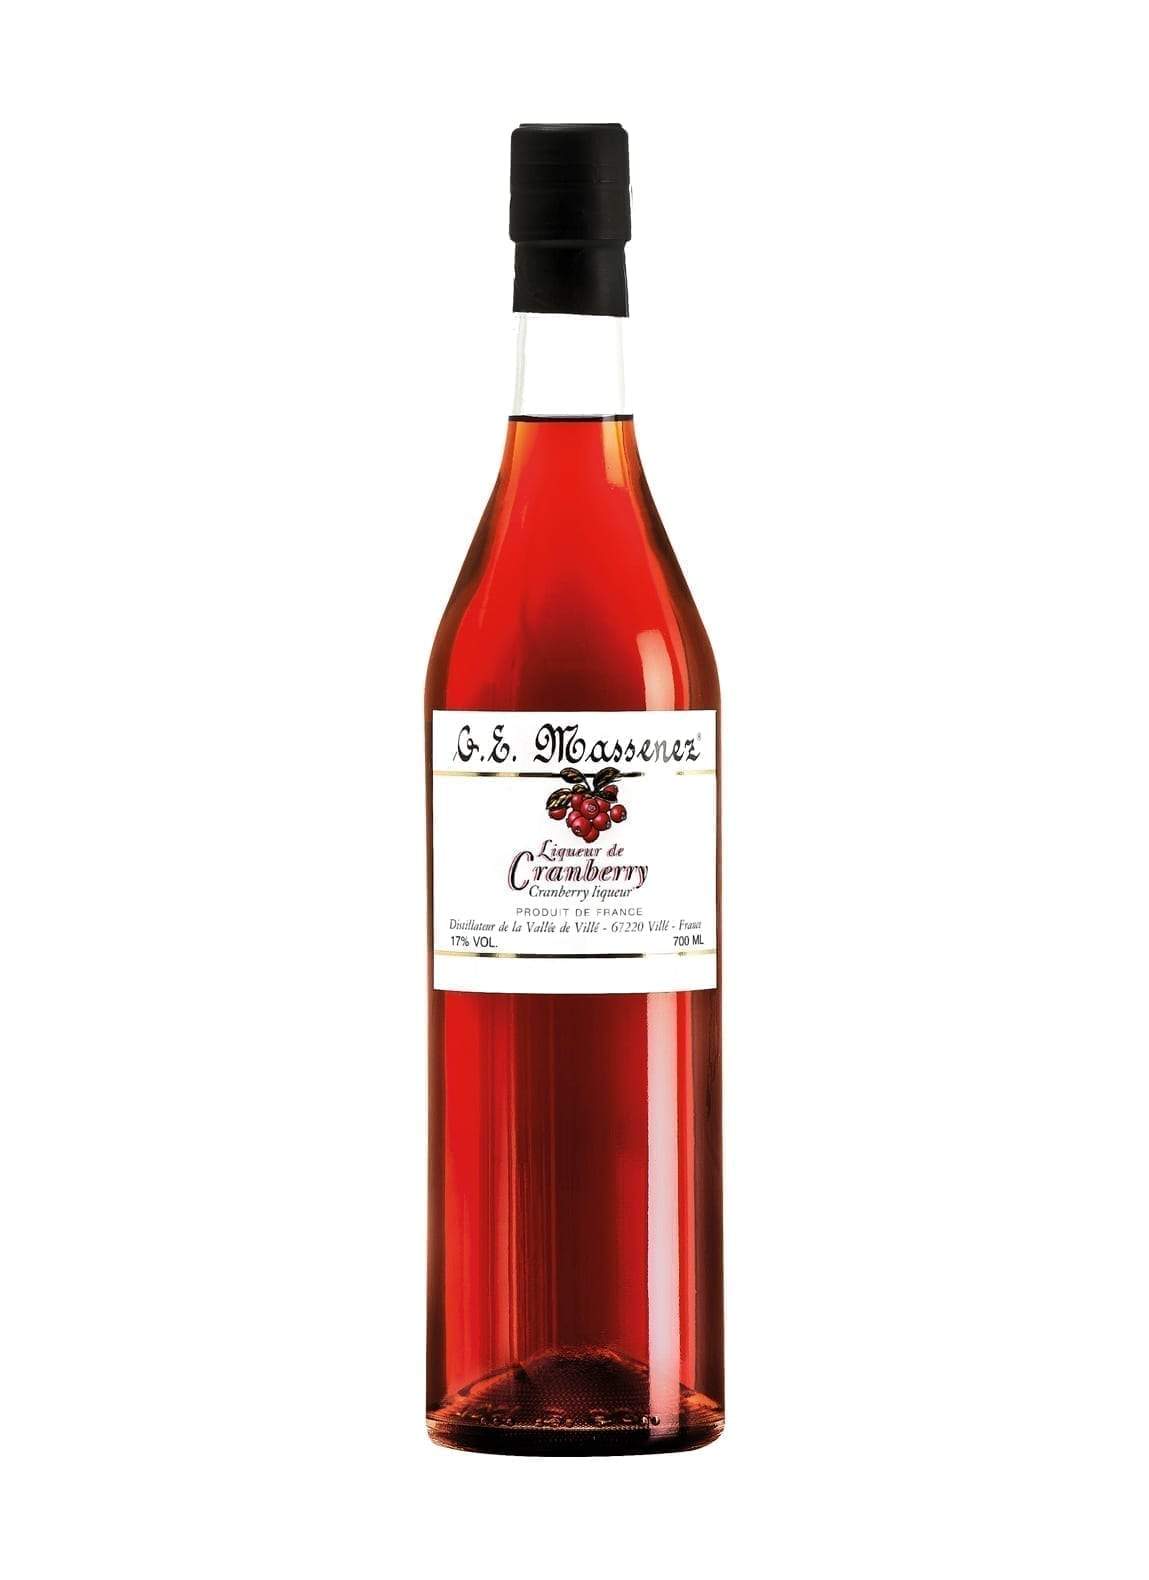 Massenez Liqueur de Cranberry 17% 700ml | Liqueurs | Shop online at Spirits of France